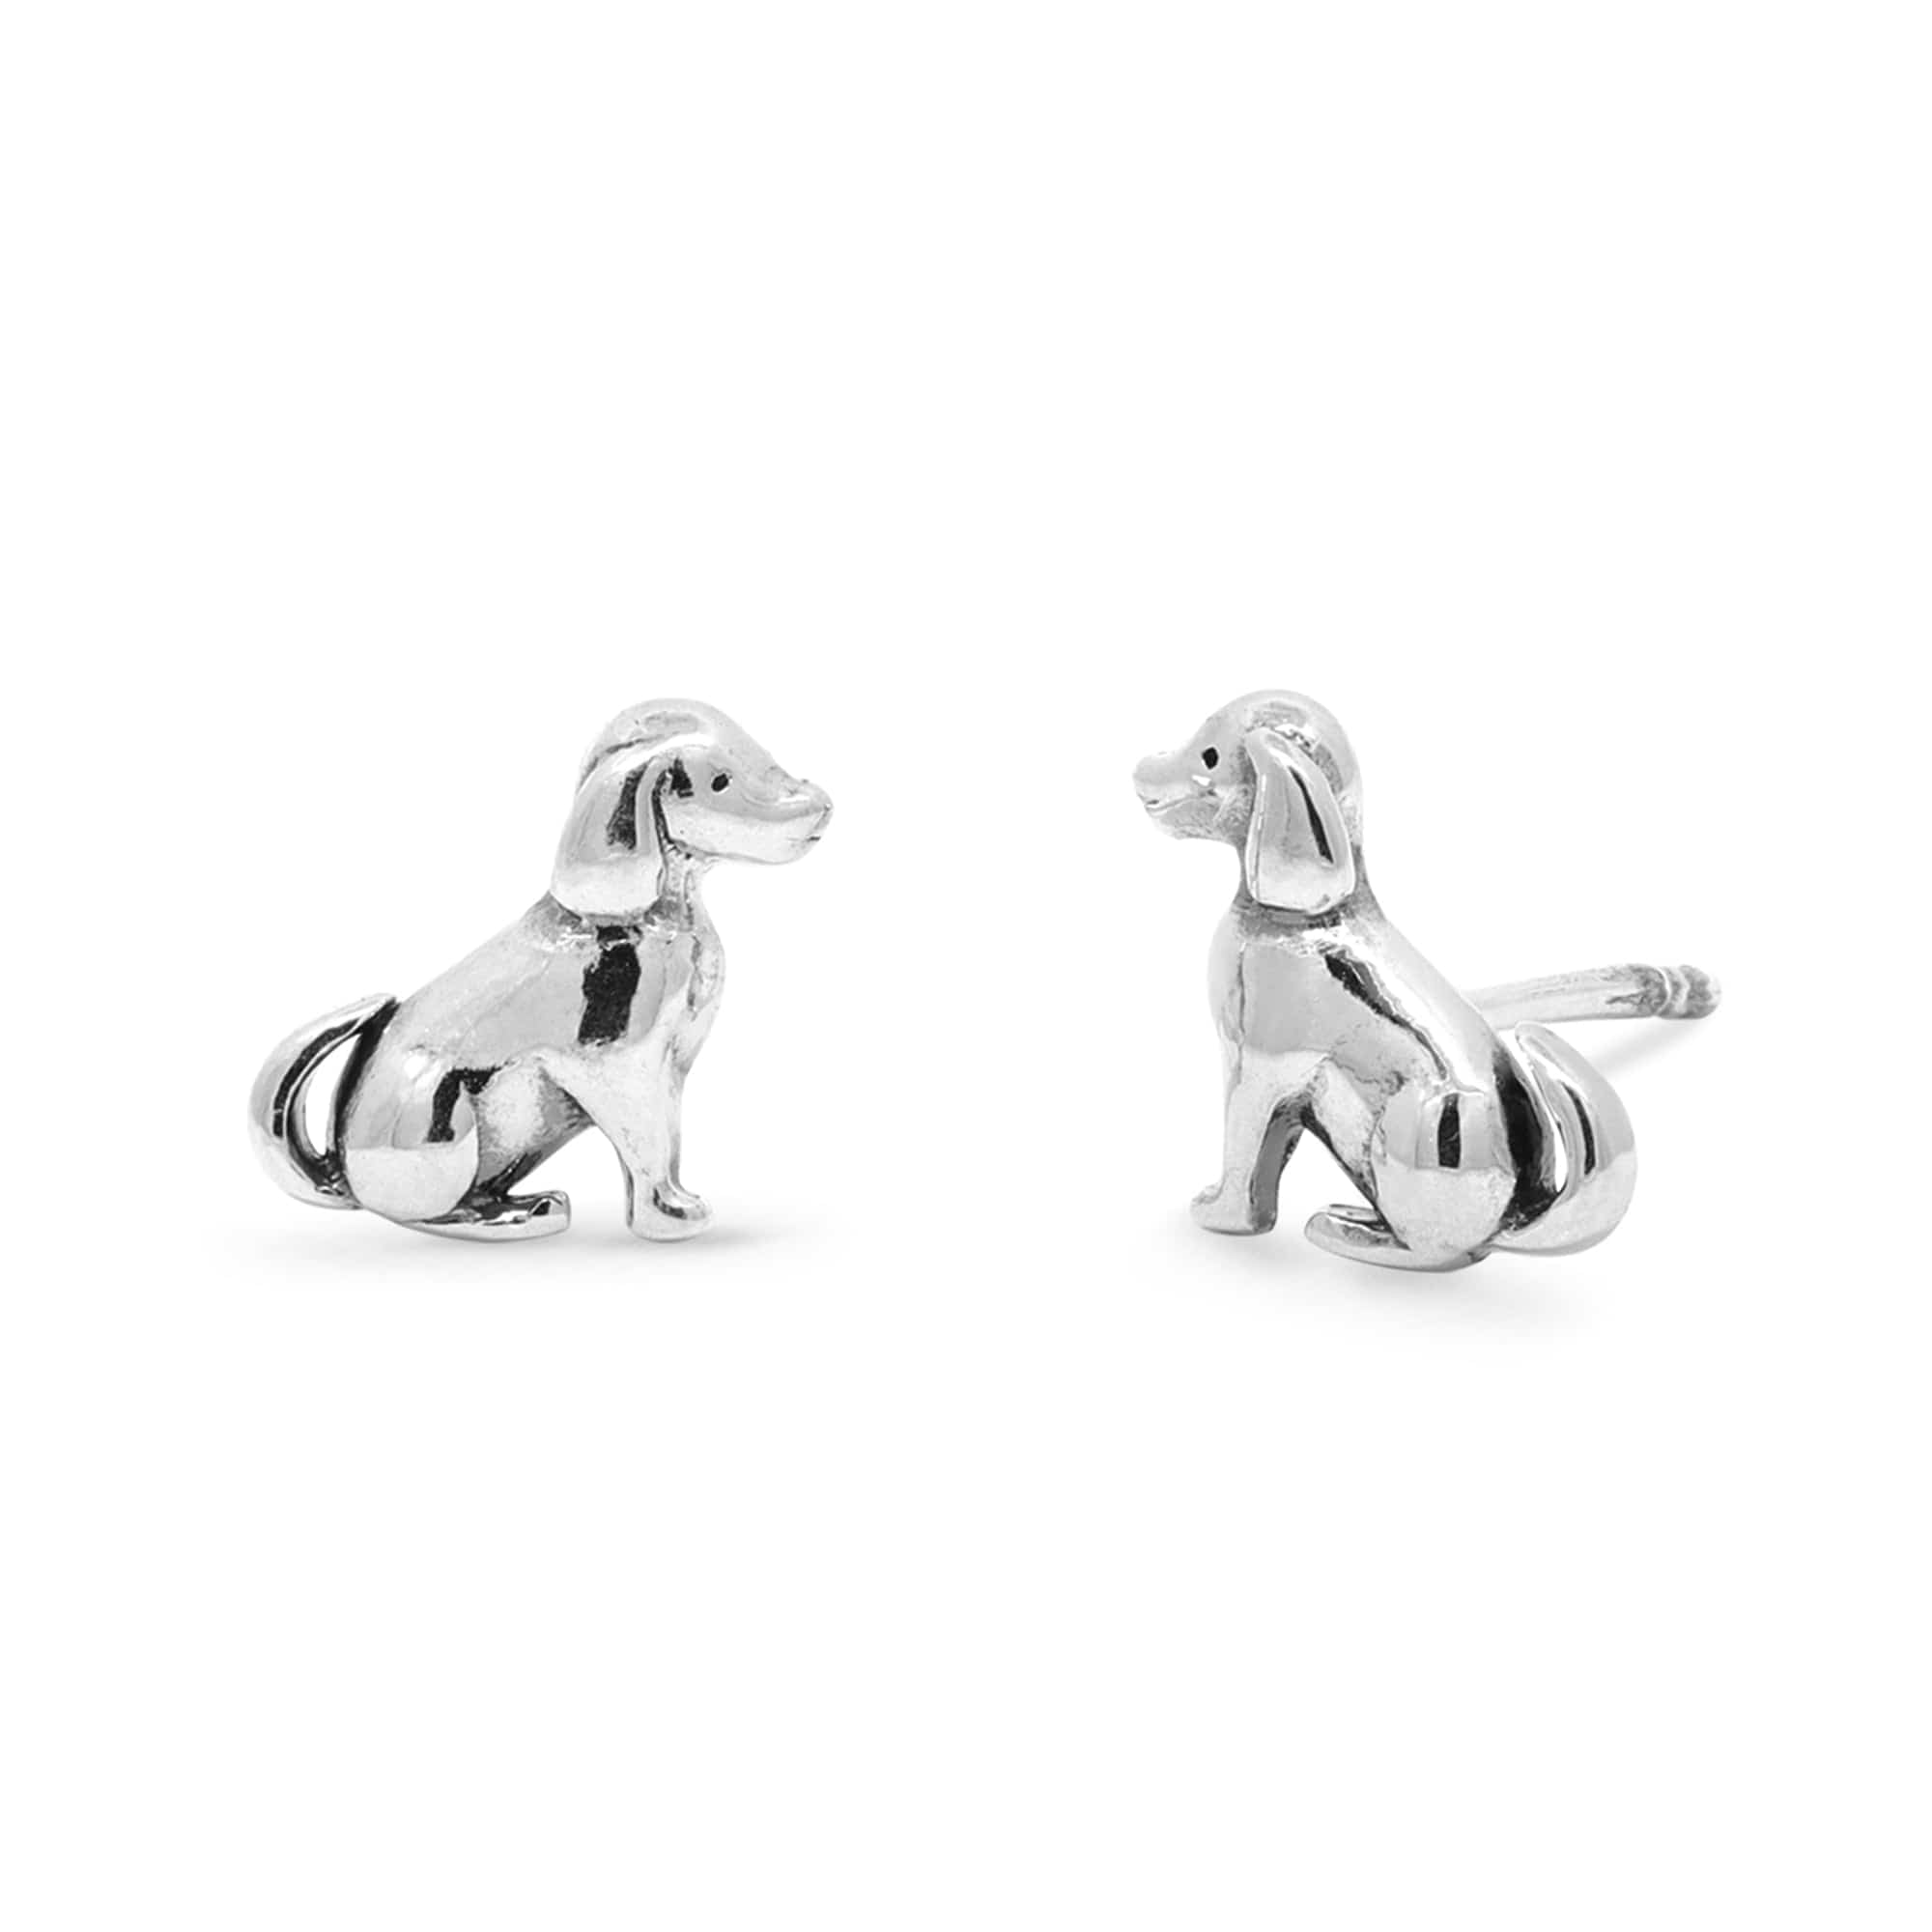 Boma Jewelry Earrings Sitting Puppy Dog Earrings Studs